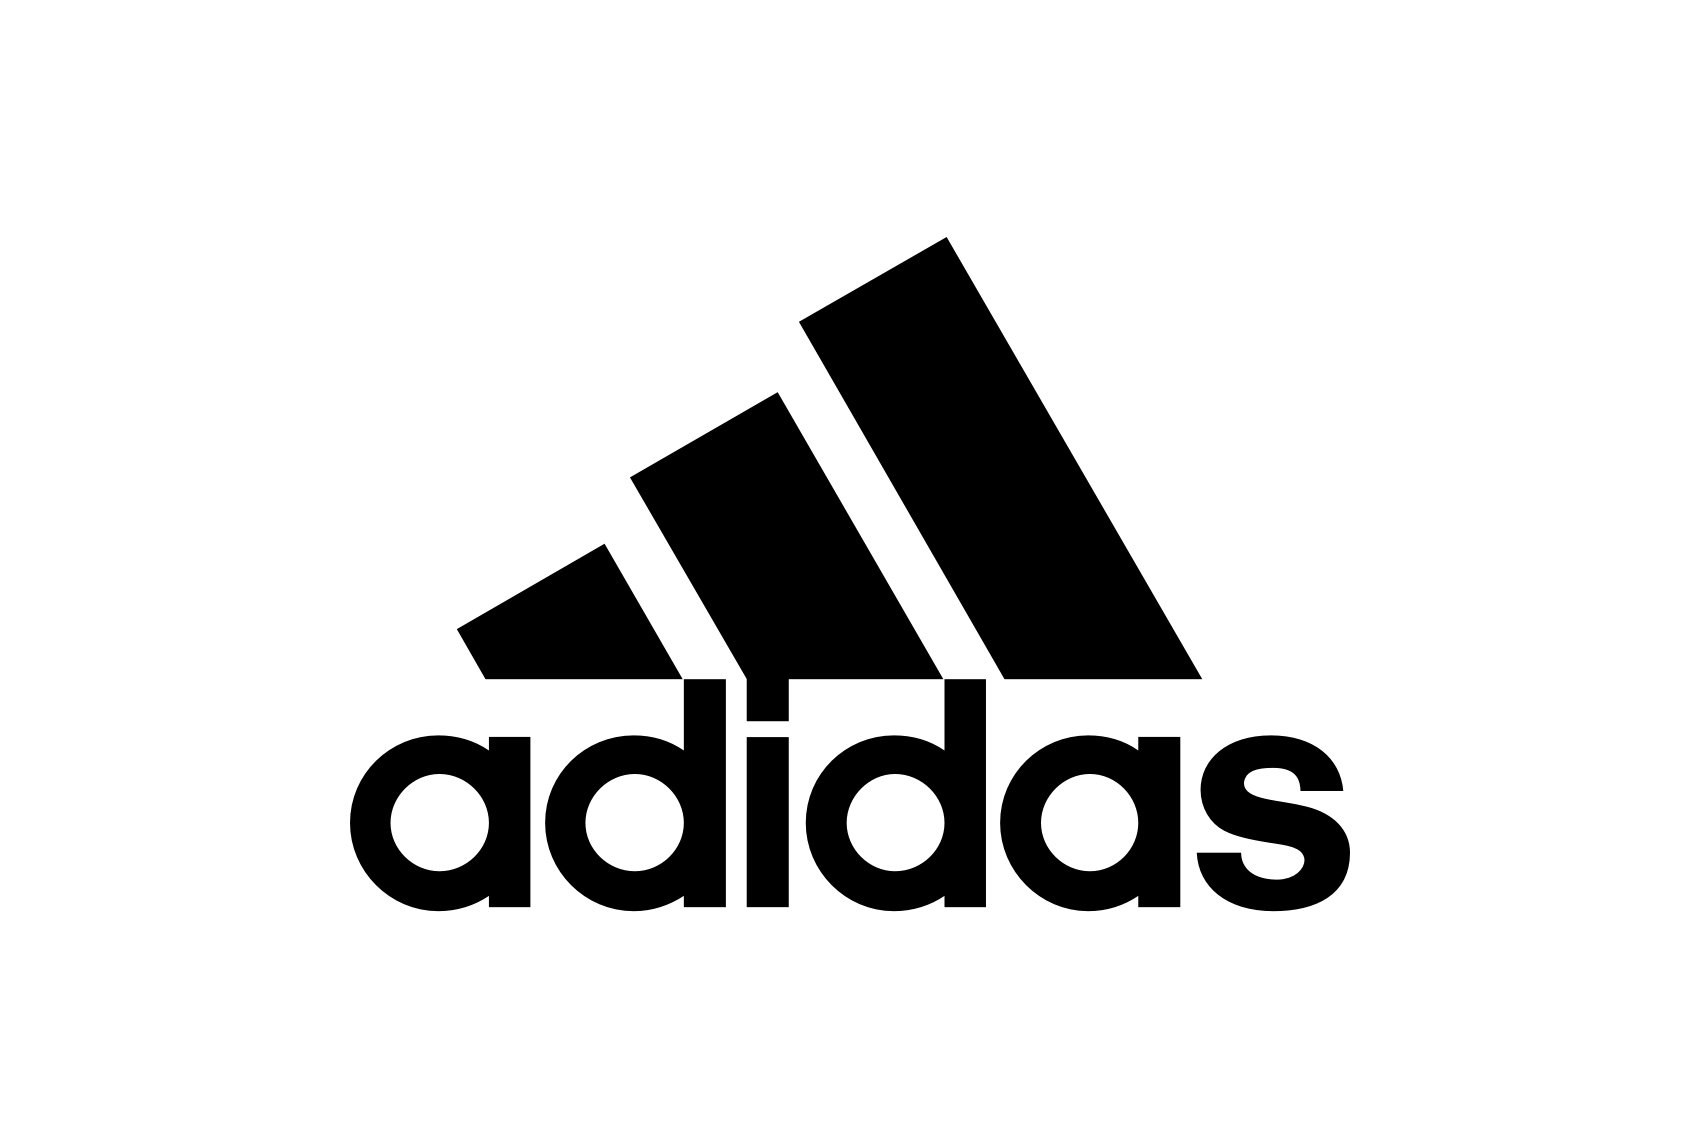 Sports Brands Logo